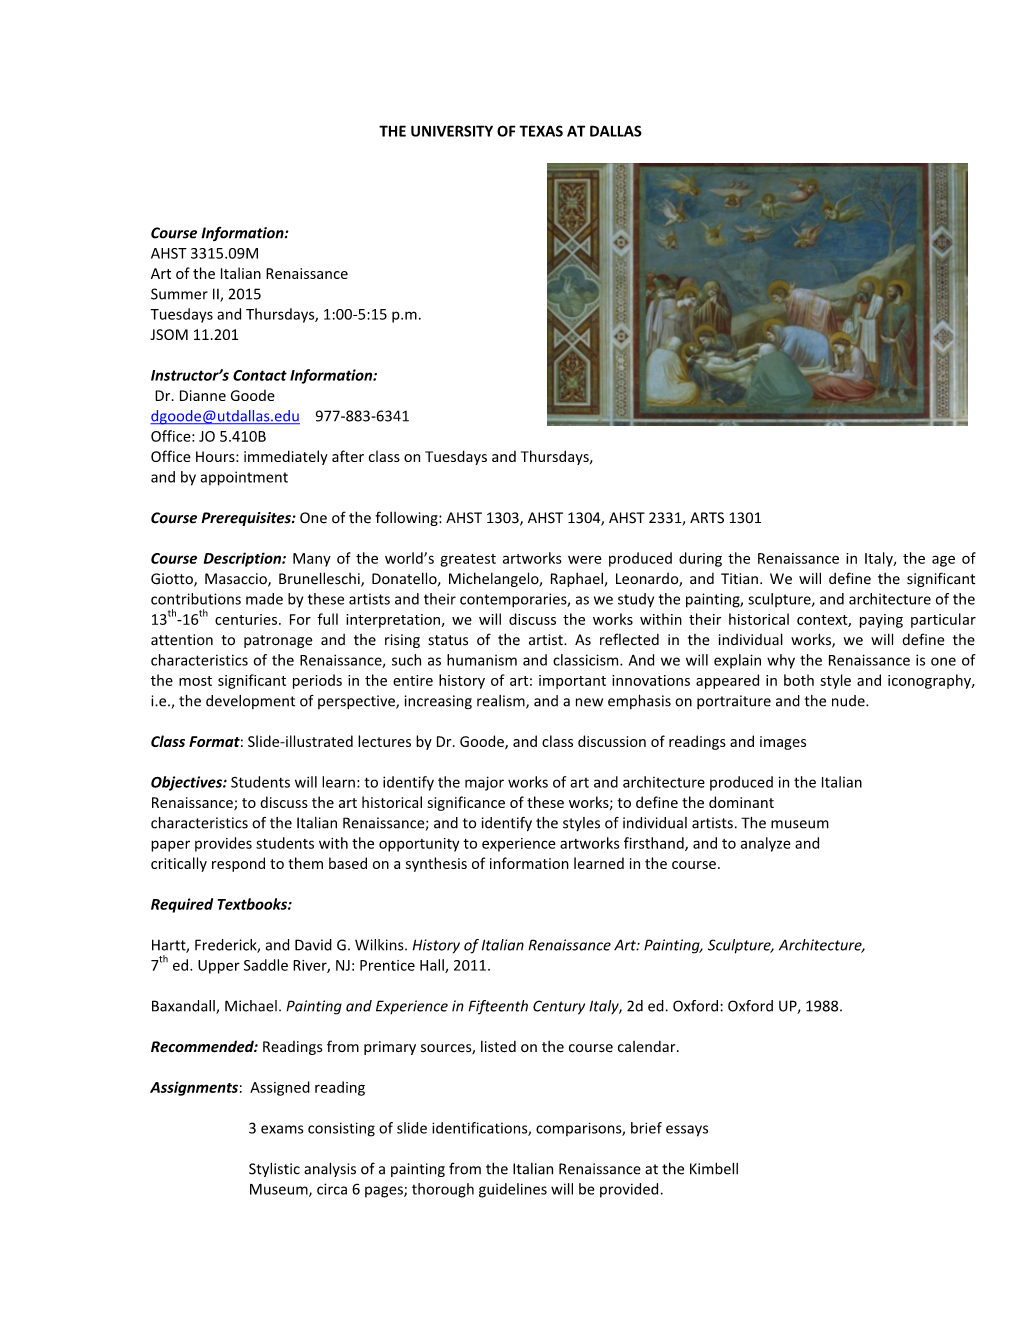 AHST 3315.09M Art of the Italian Renaissance Summer II, 2015 Tuesdays and Thursdays, 1:00-5:15 P.M